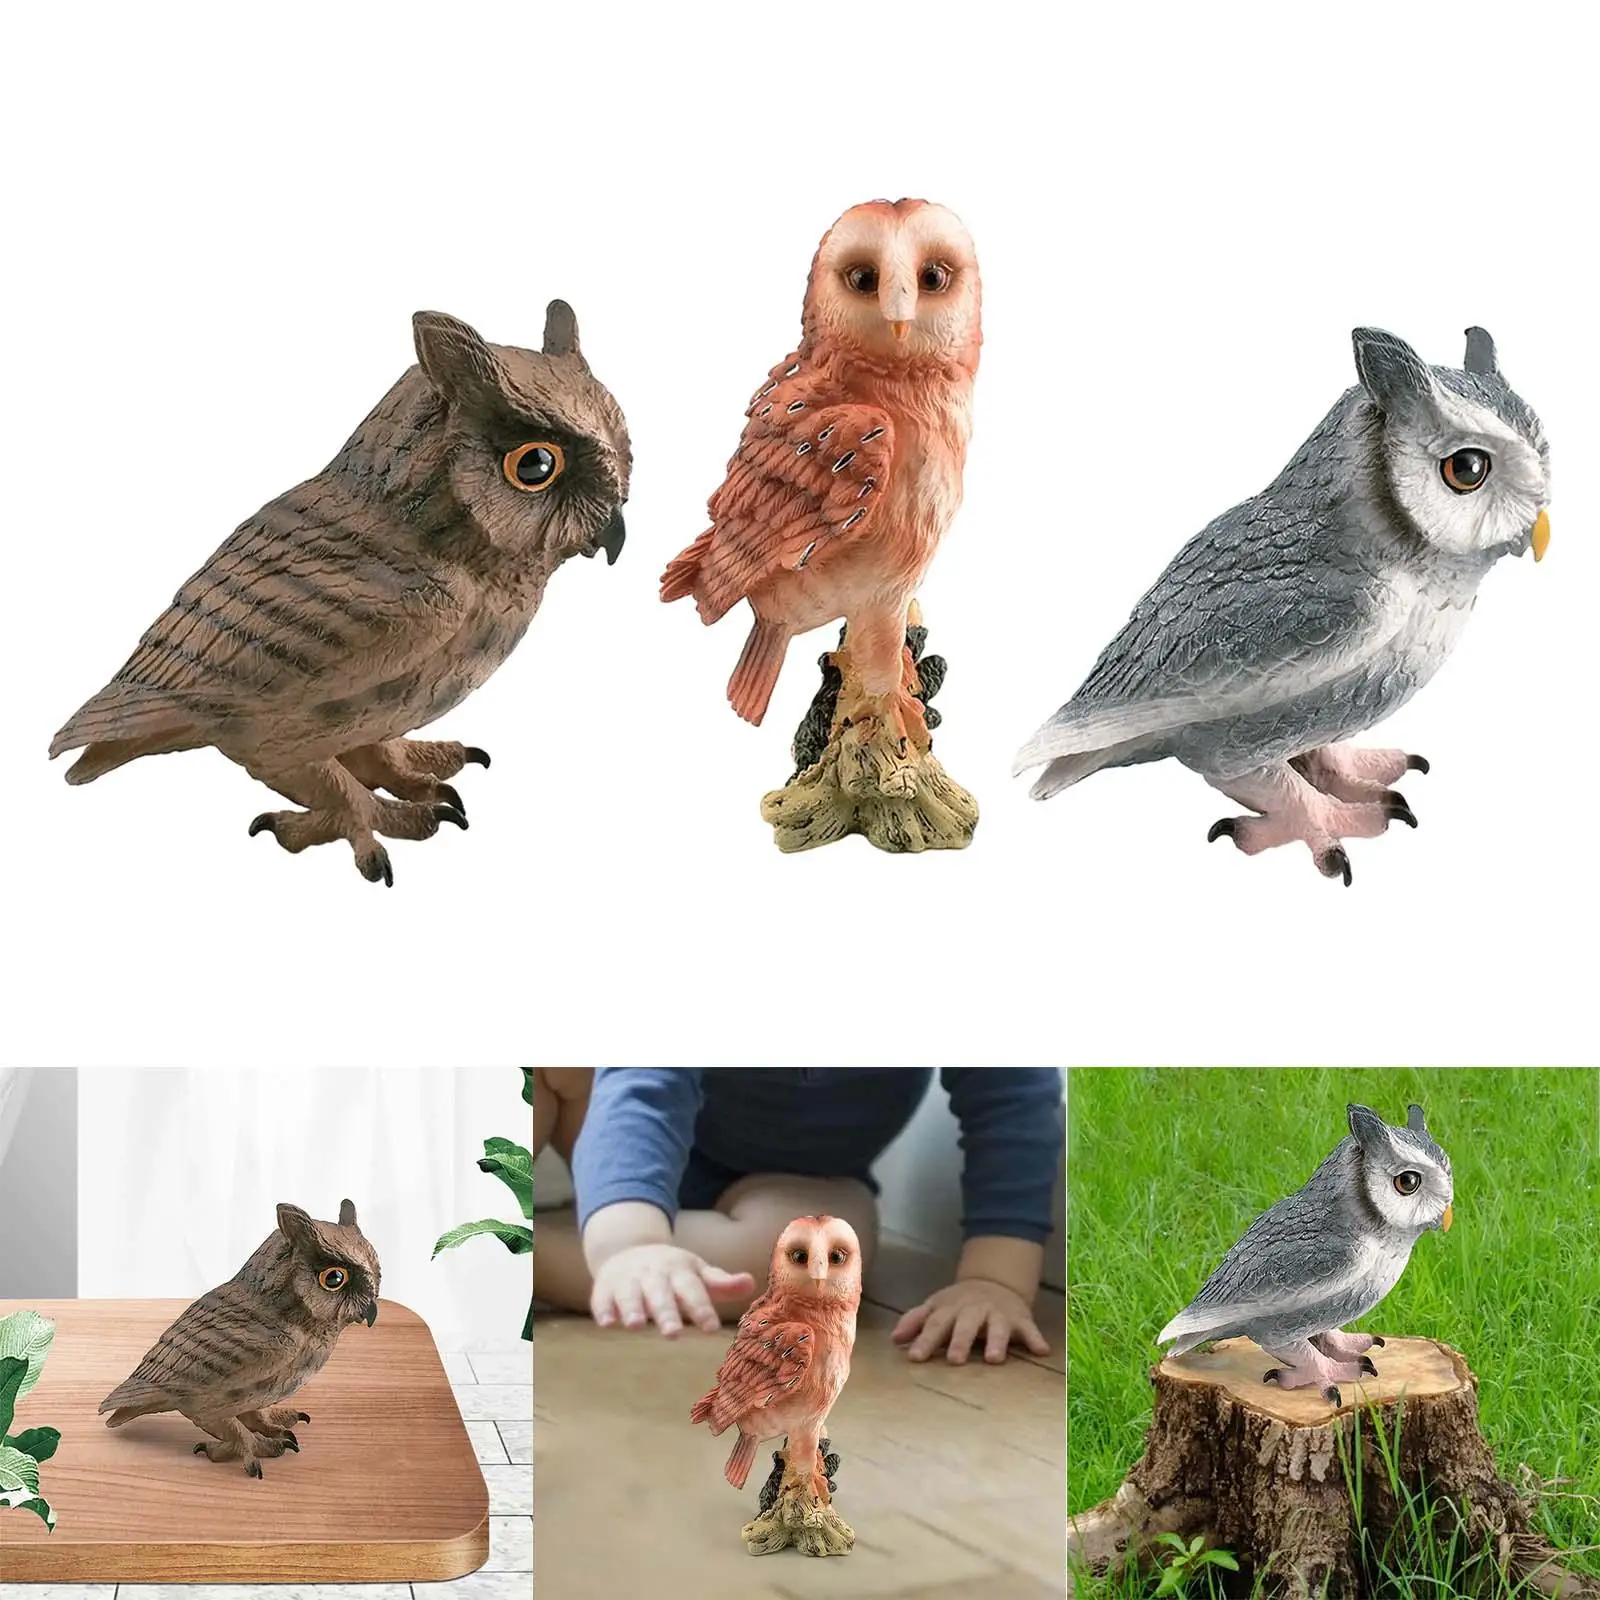 Simulation Owl Model Desktop Decor Owl Statue Sculptures for Decor Ornaments Desktop Decoration Educational Teaching Materials